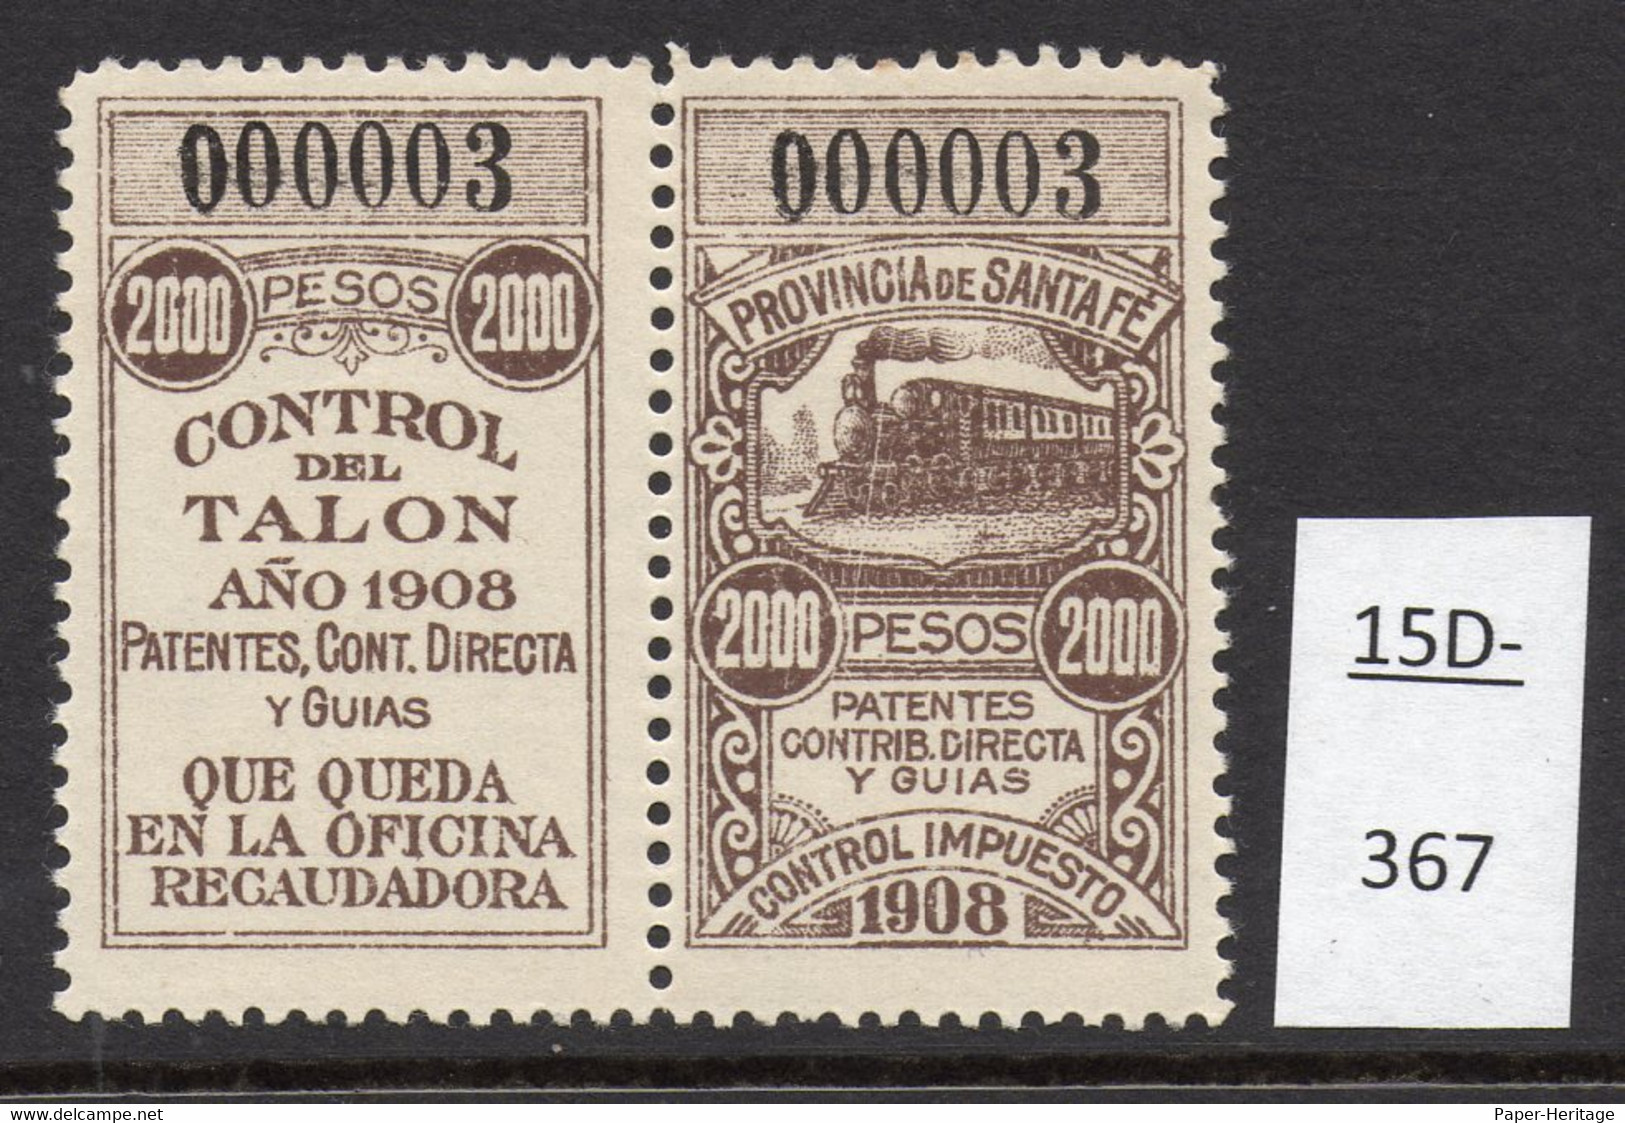 Argentina 1908 Santa Fe Revenue Steam Train – Railway – Locomotive 2000 Pesos With Talon MH - Nuevos